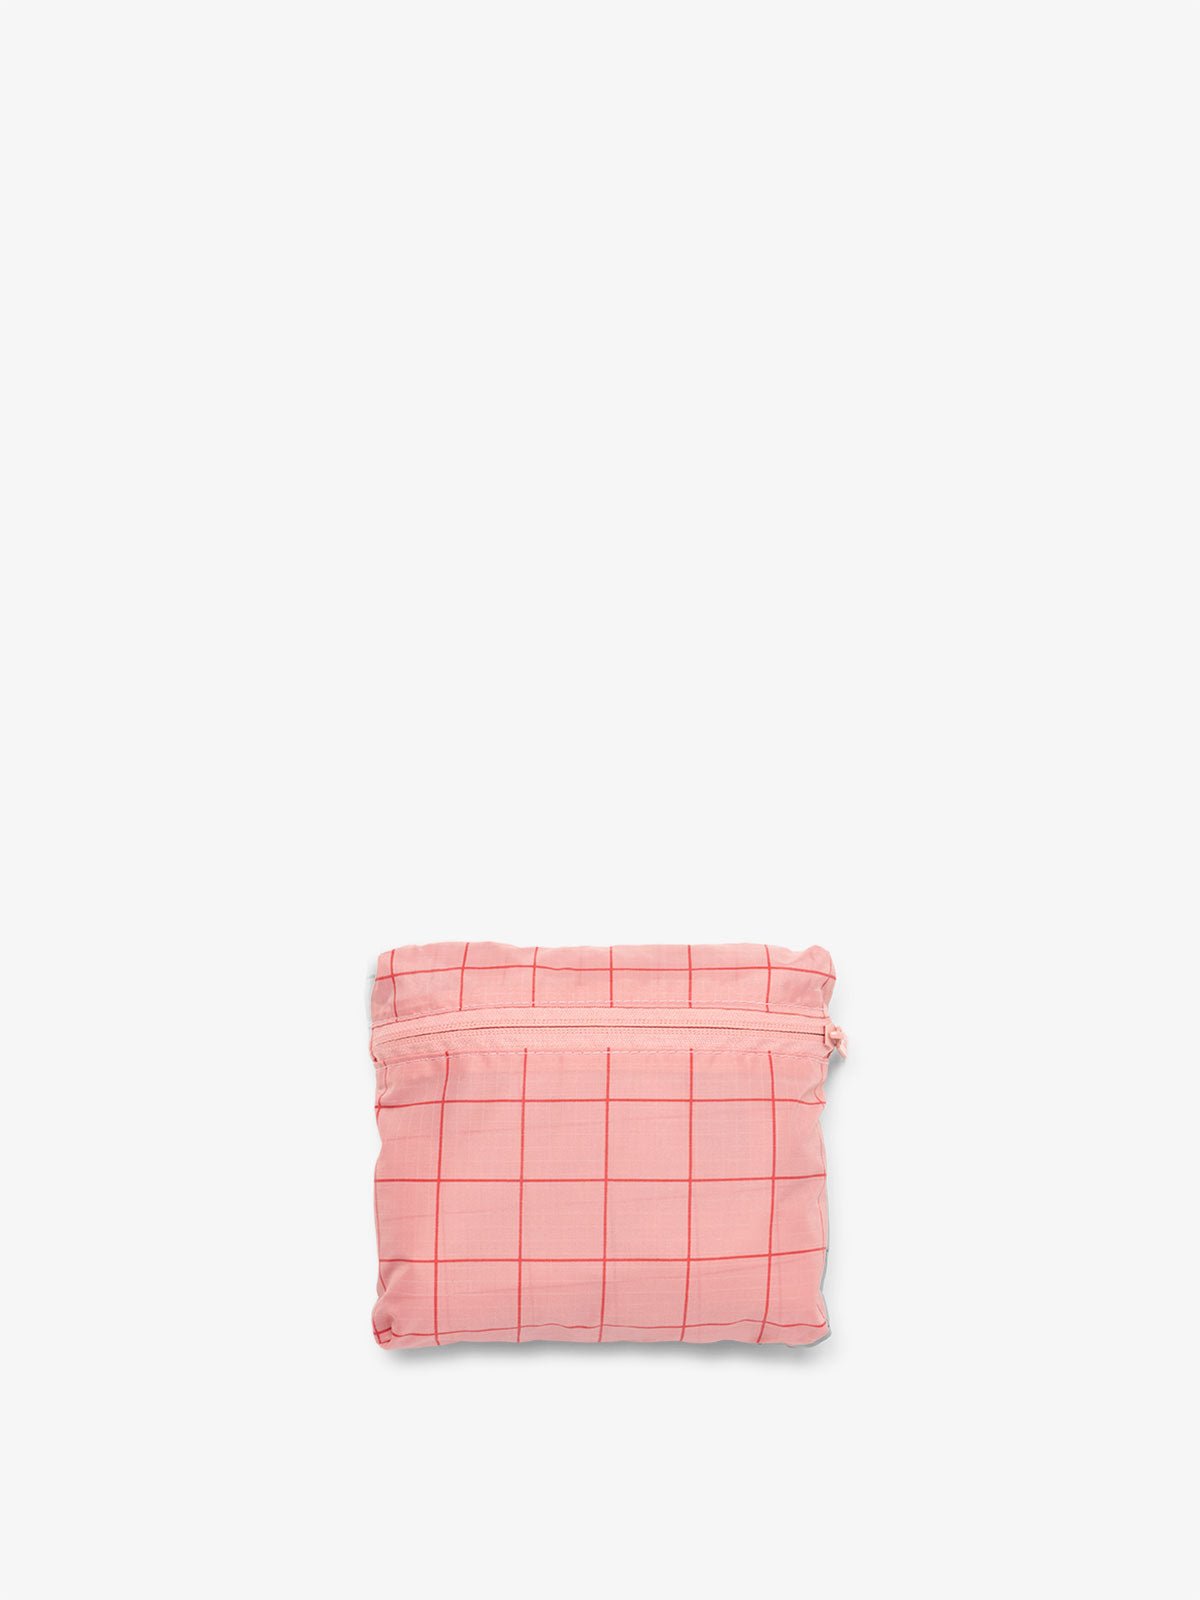 CALPAK Compakt foldable tote bag in pink grid print